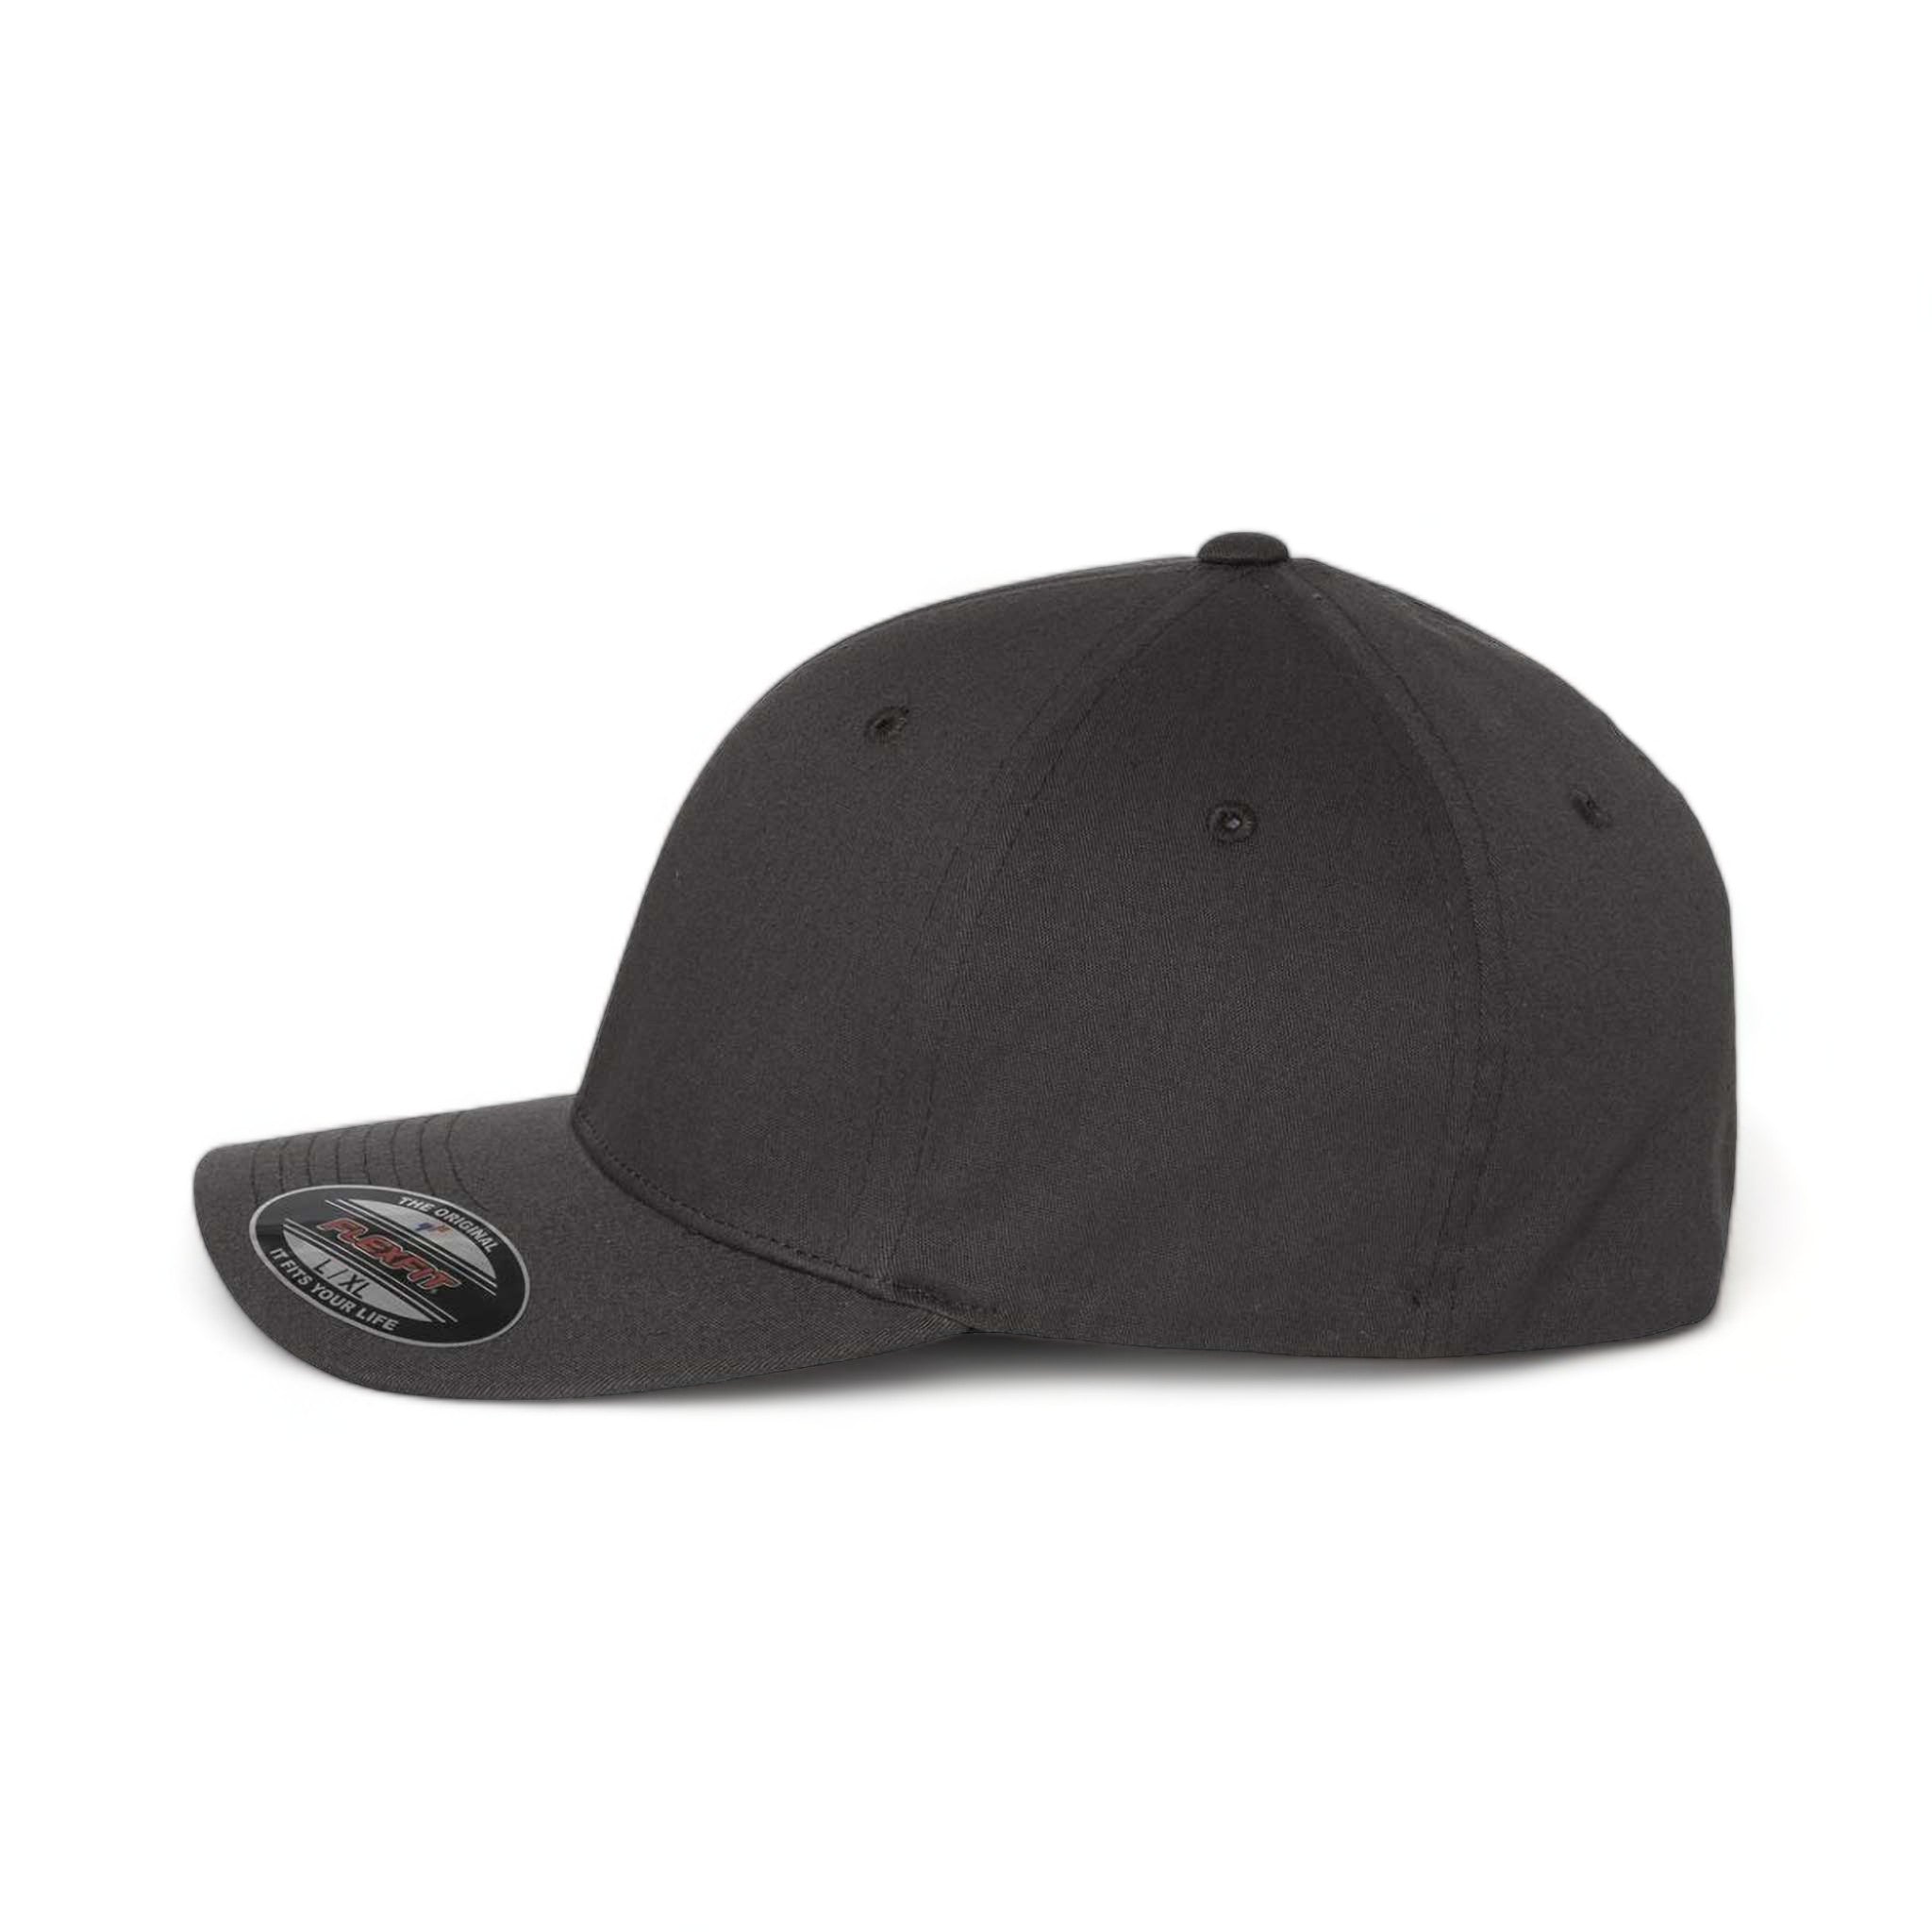 Side view of Flexfit 5001 custom hat in dark grey